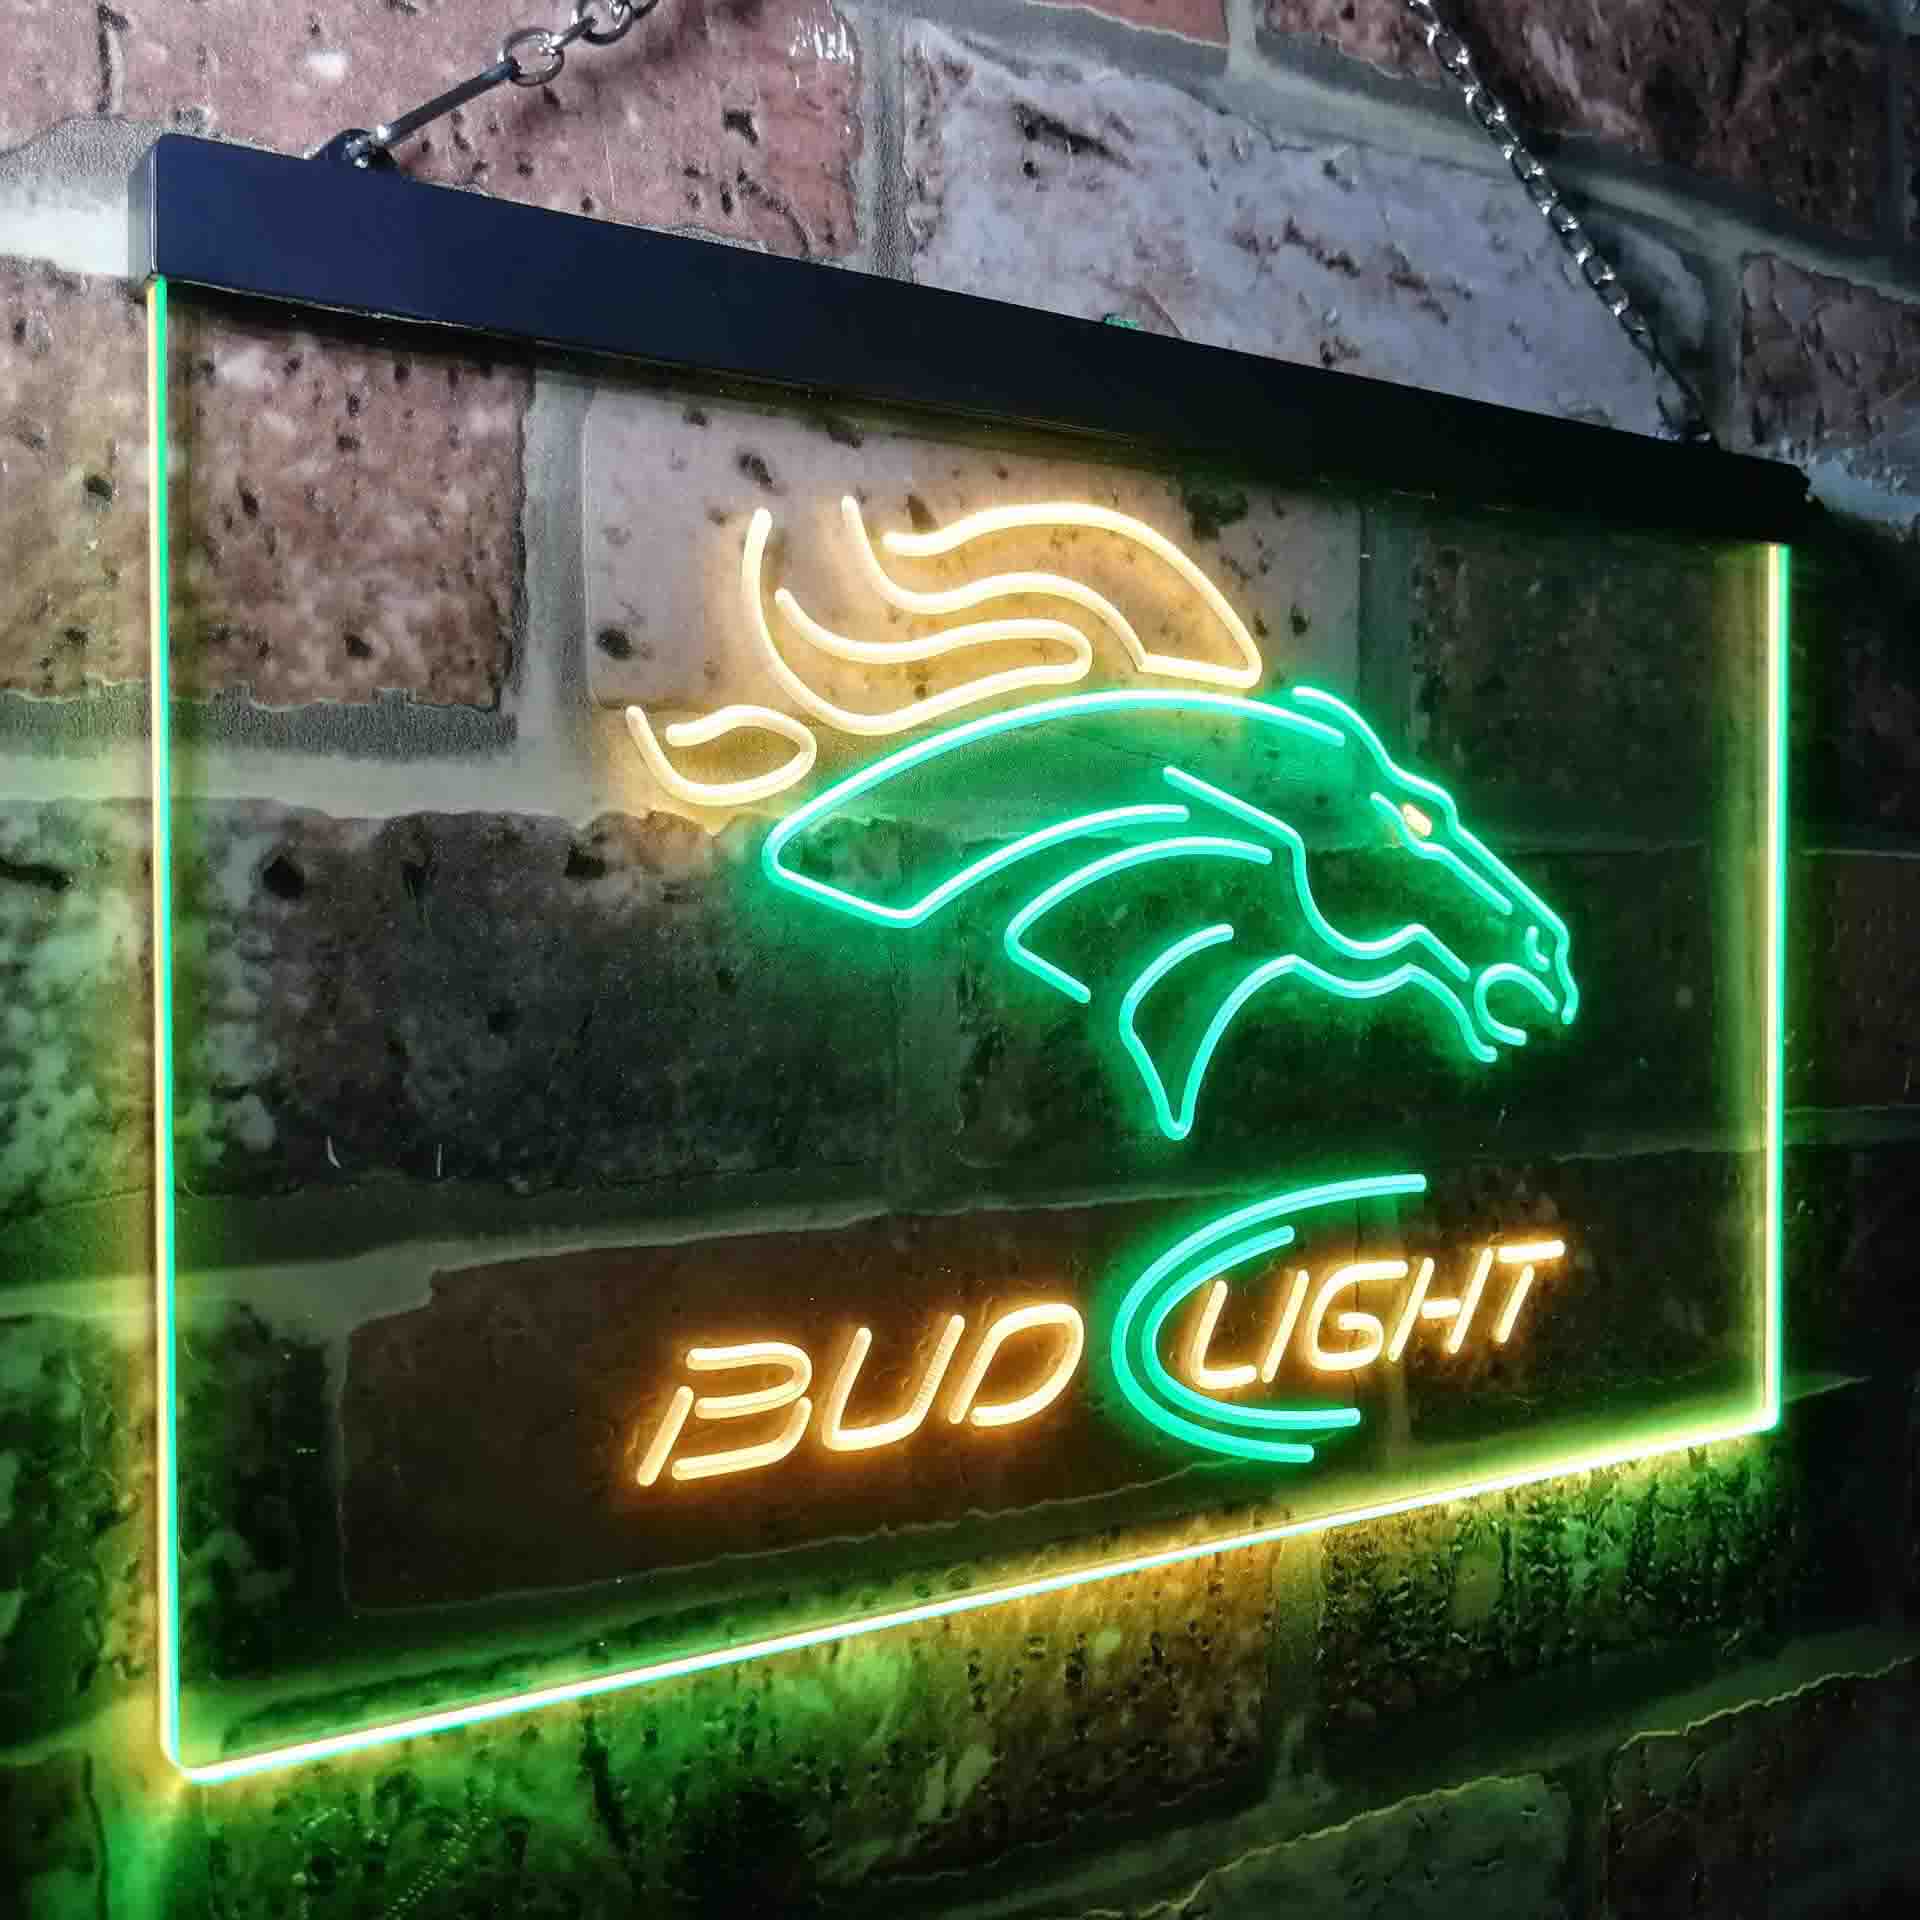 Denver Broncos Bud Light Neon-Like LED Sign